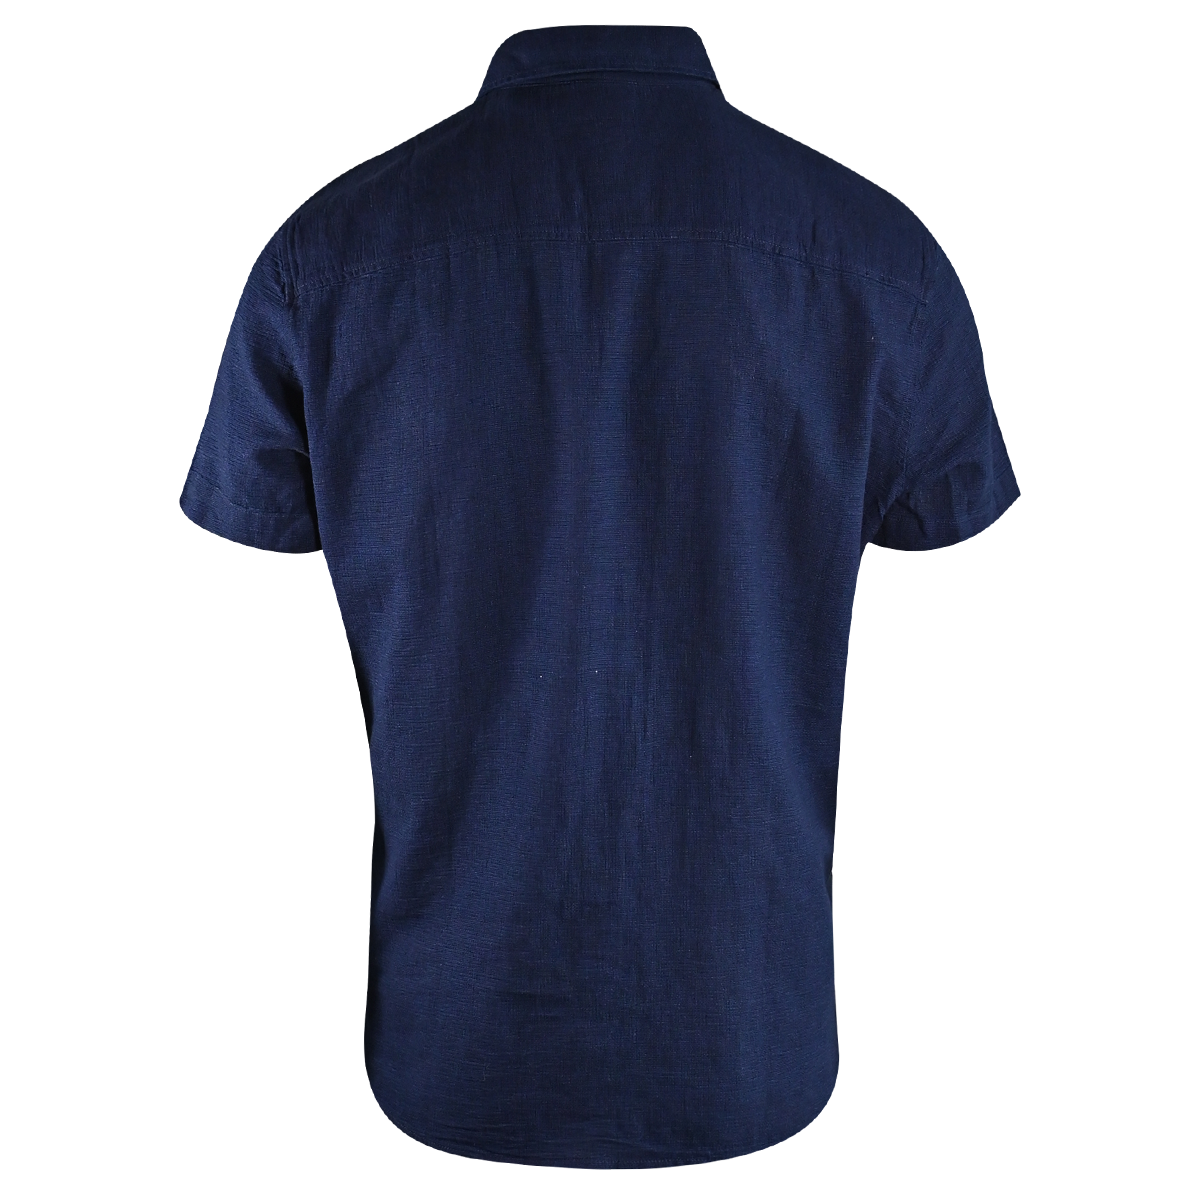 O'Neill Men's Woven Shirt Solid Dark Blue Chambray Pocket Short Sleeve (S08)